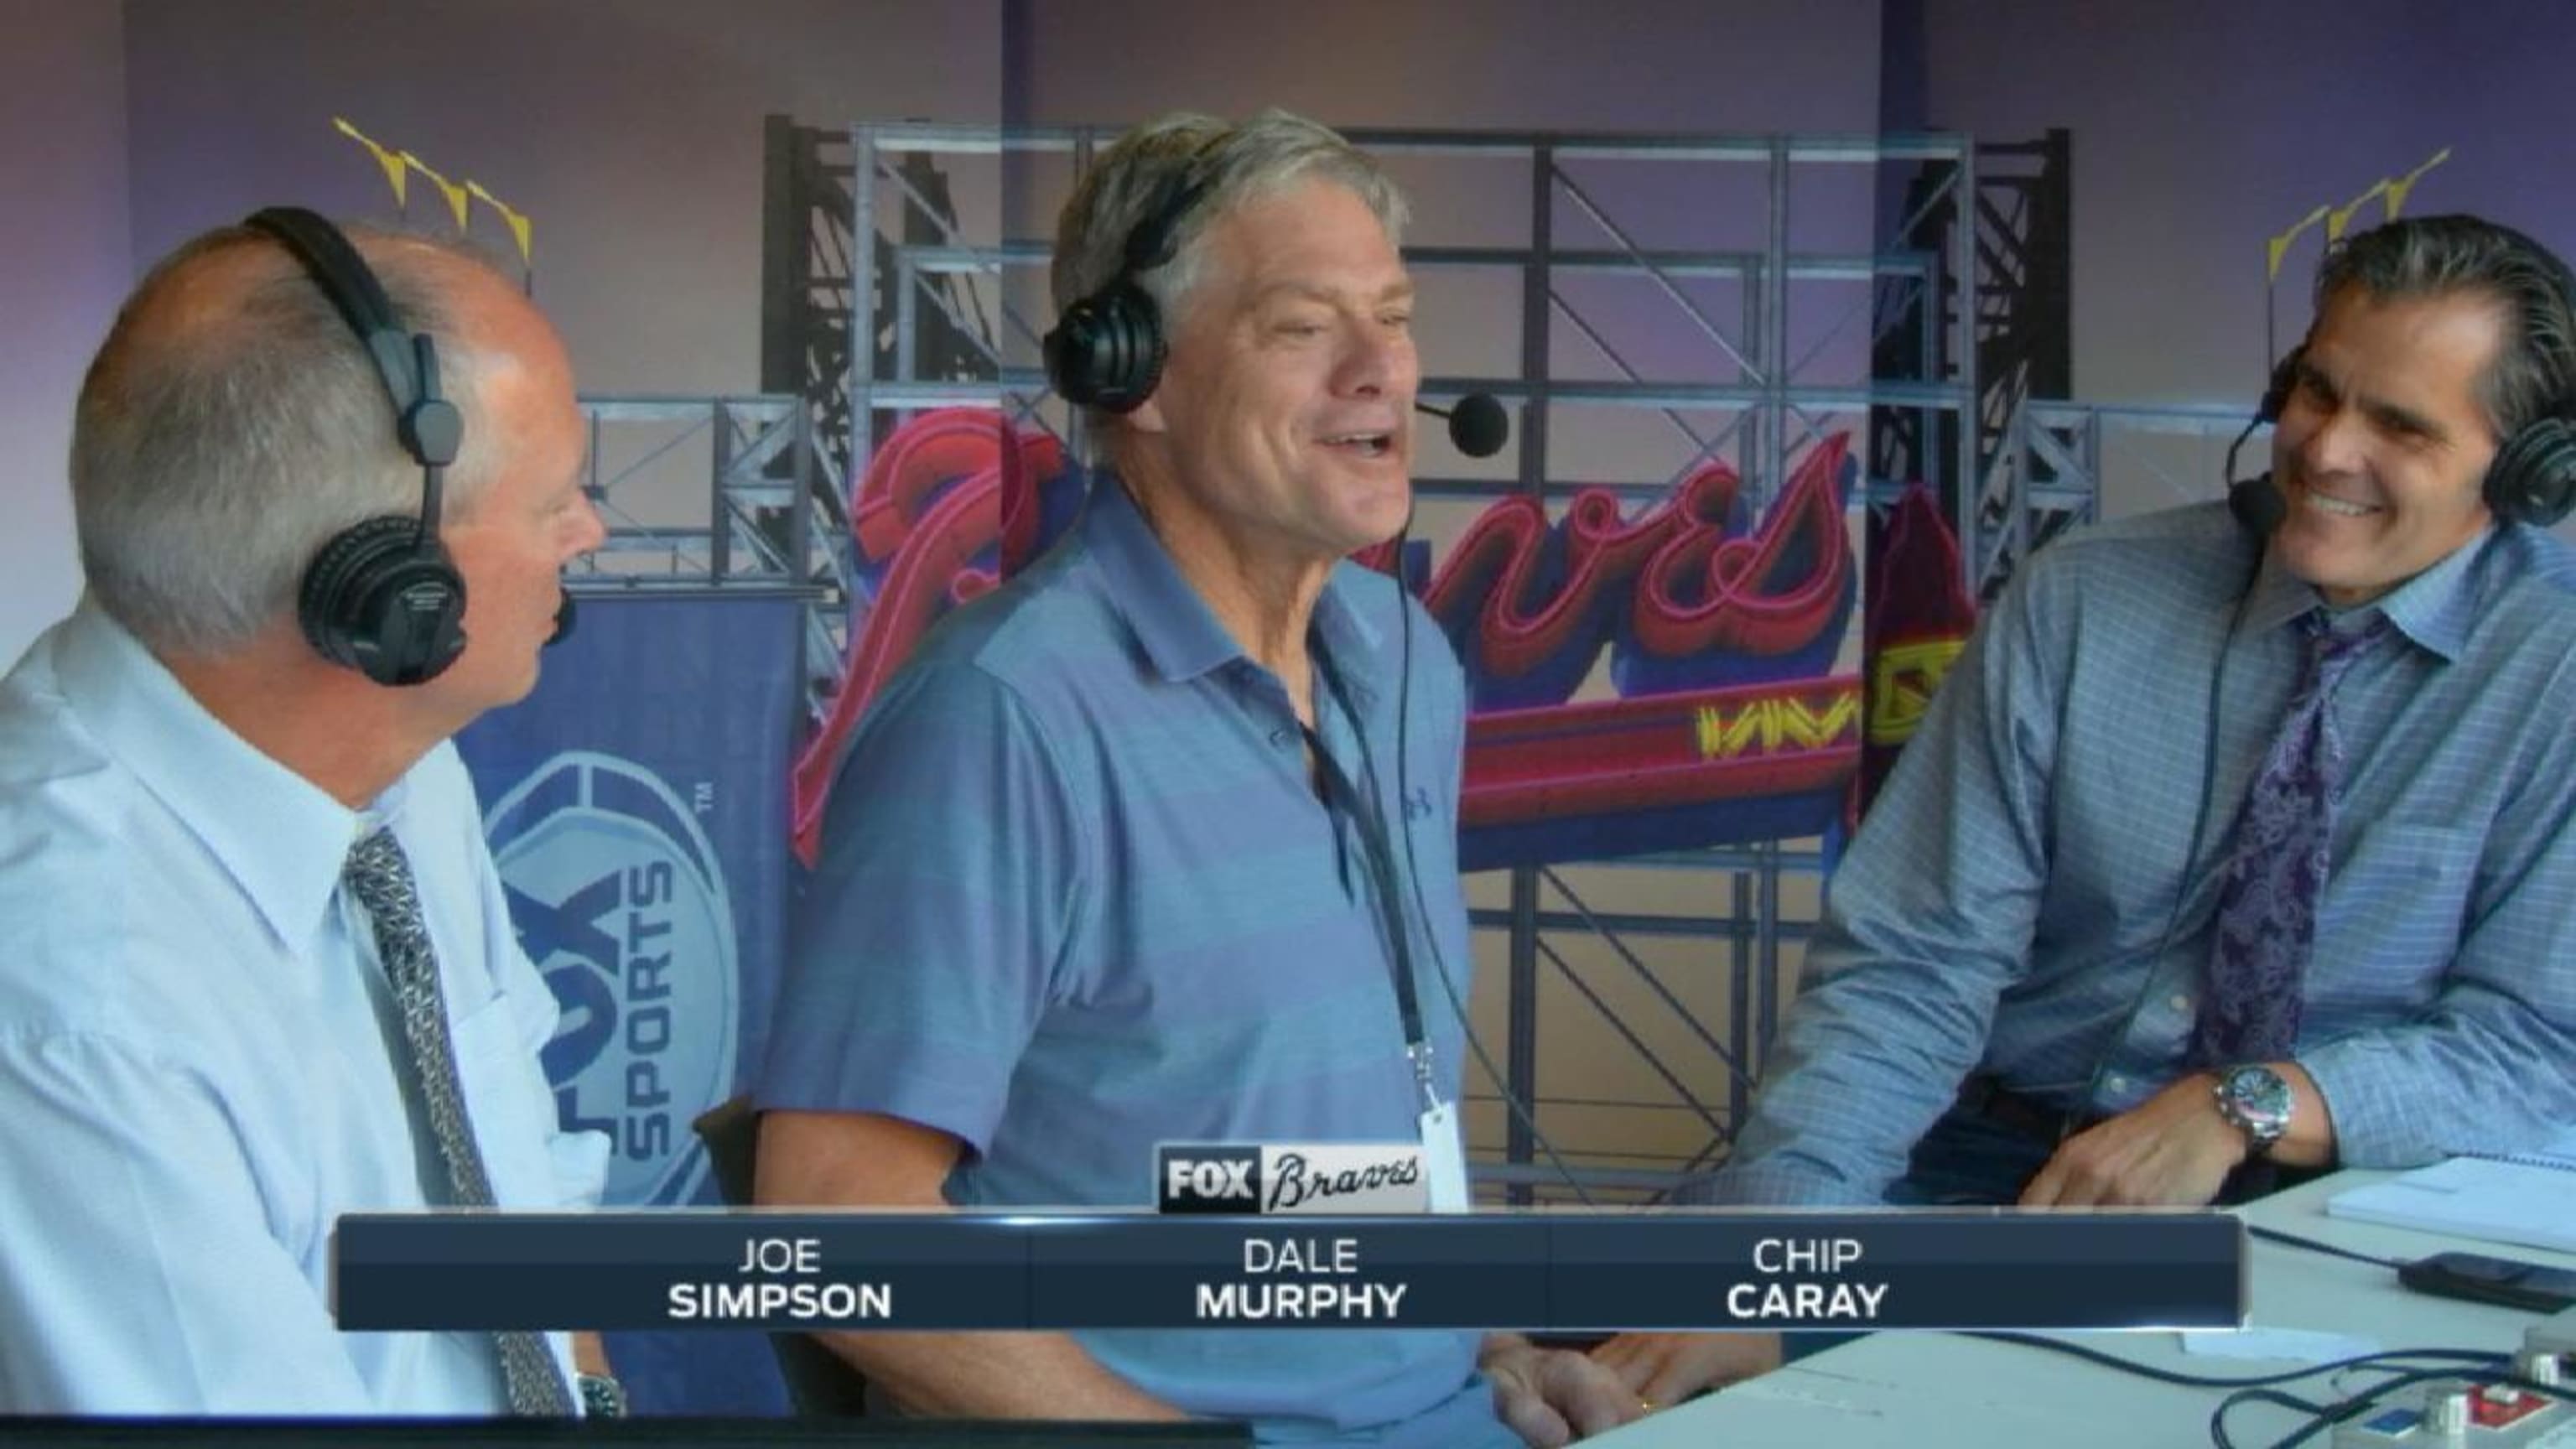 Dale Murphy on X: The Pennington family came by Murph's tonight